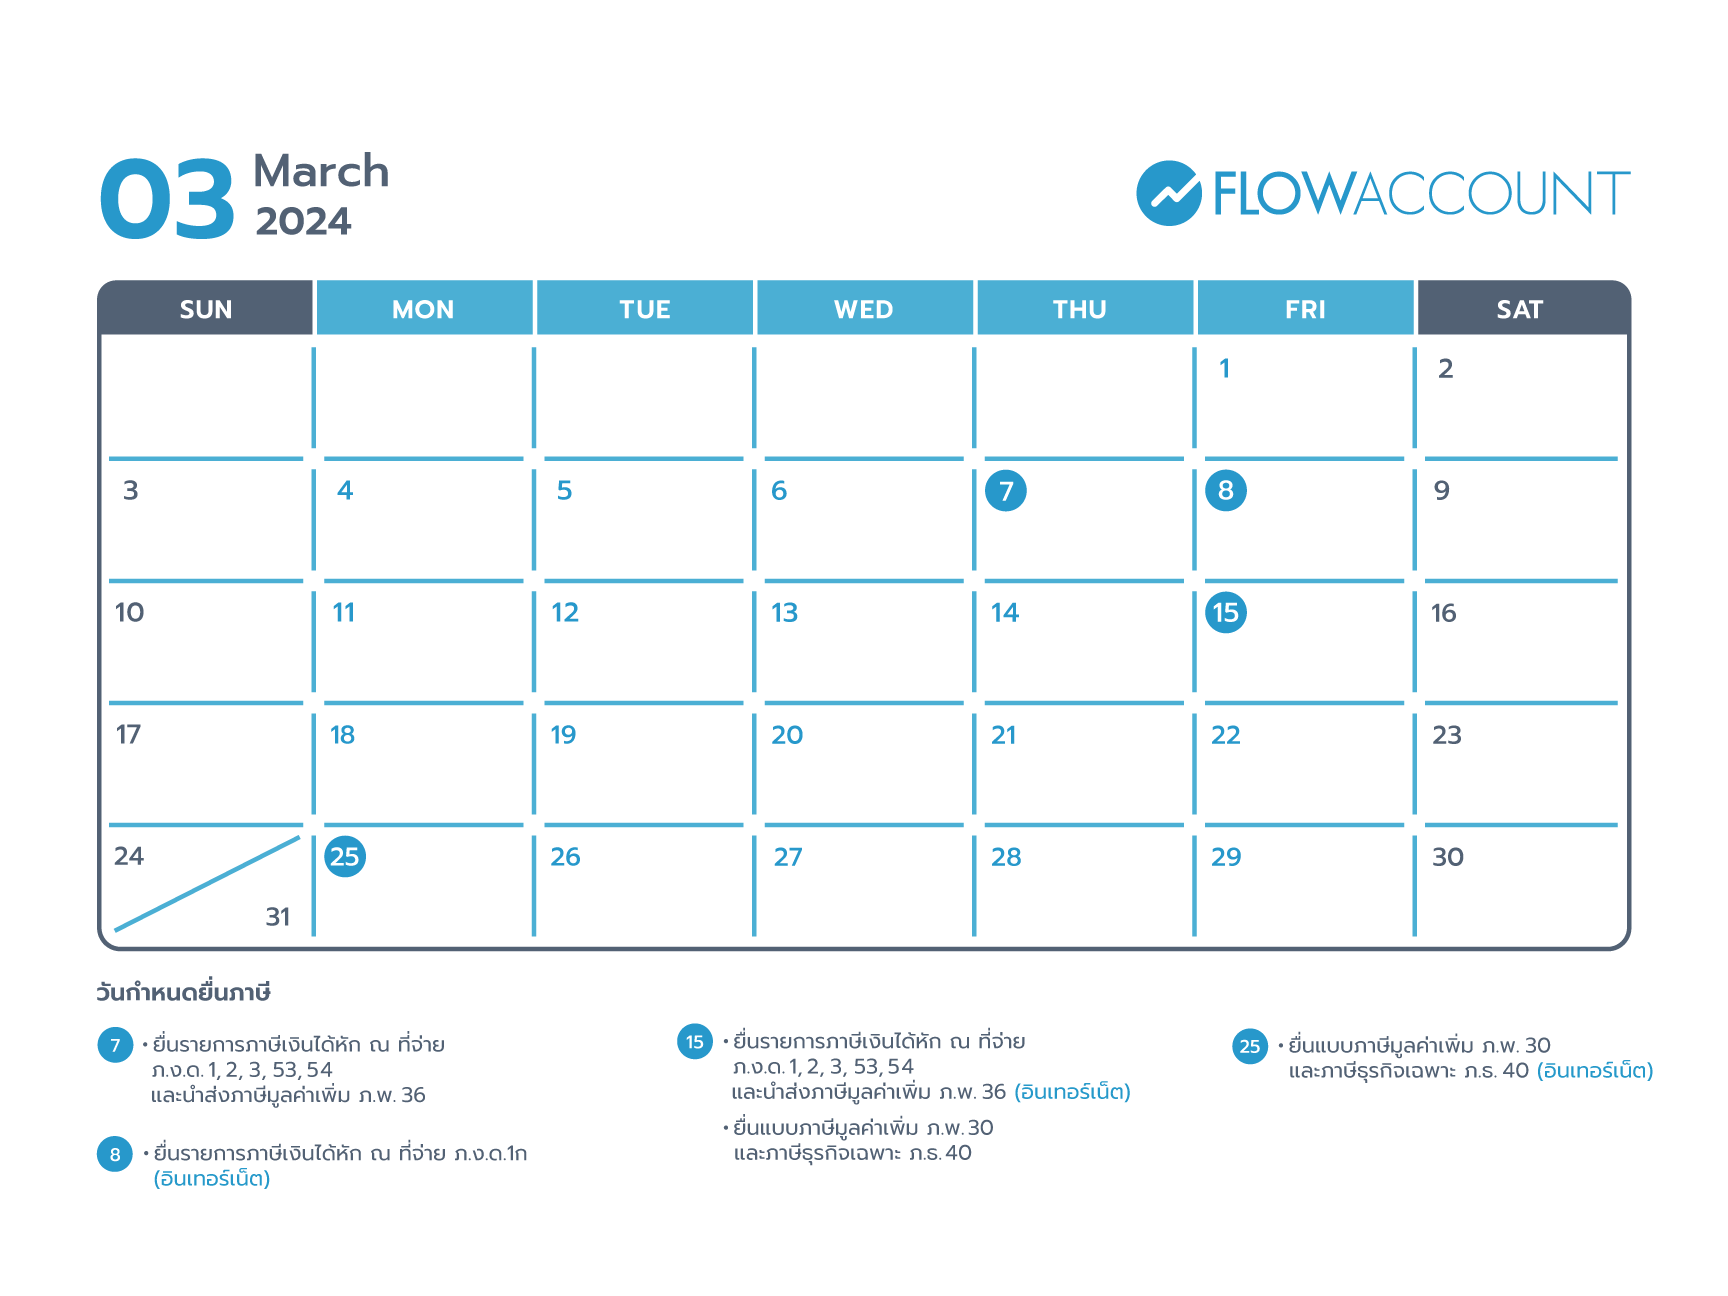 Tax calendar on March 2024